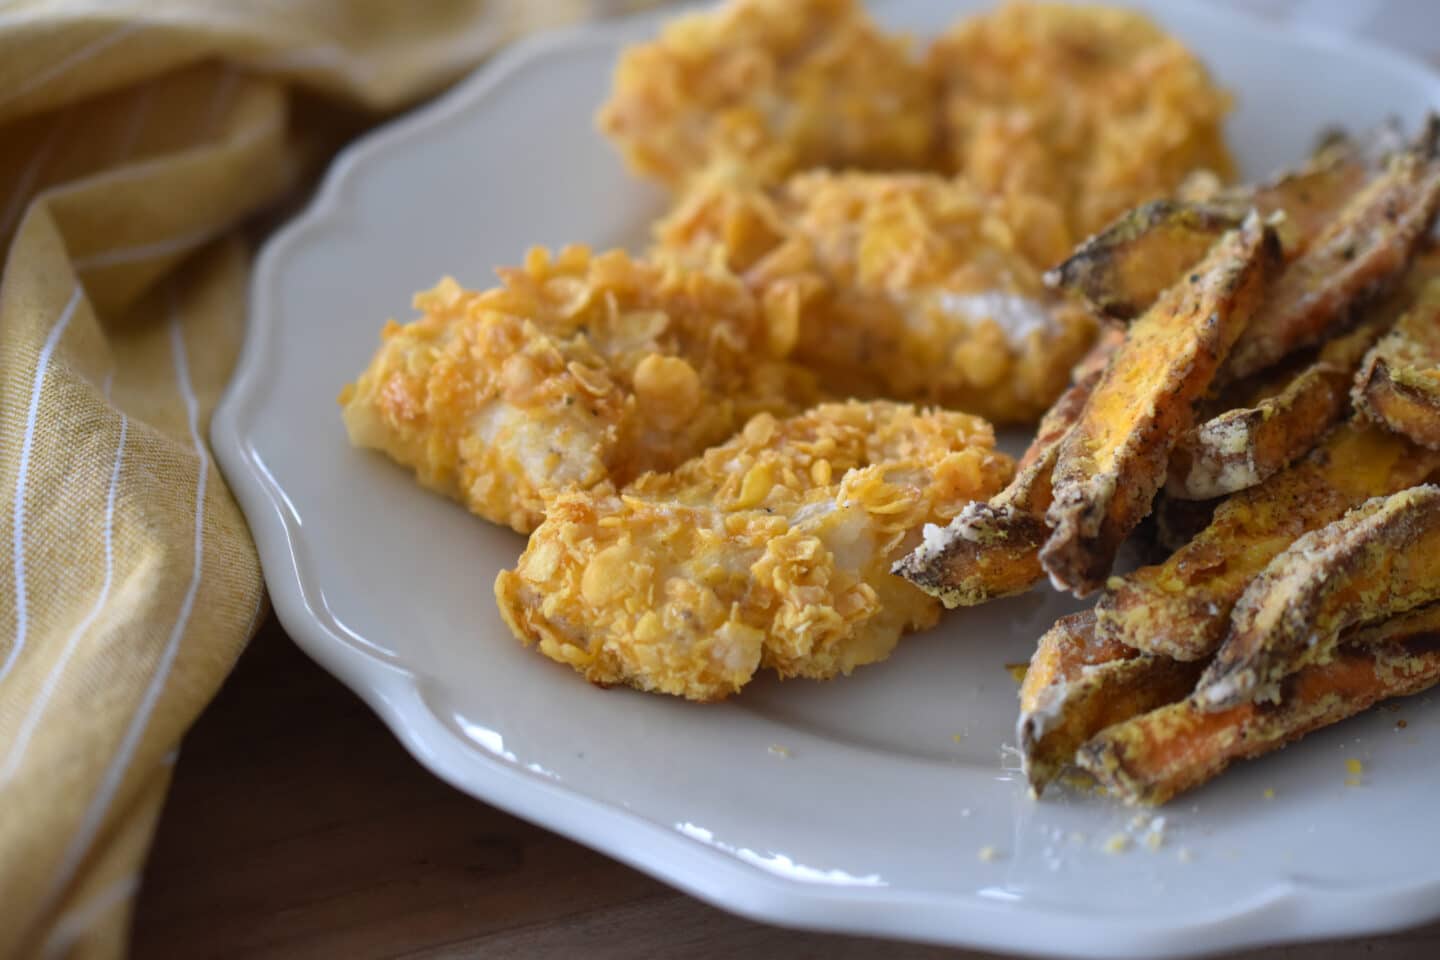 Fish & Chips - der englische Klassiker im kalorienarmen, gesunden Gewand